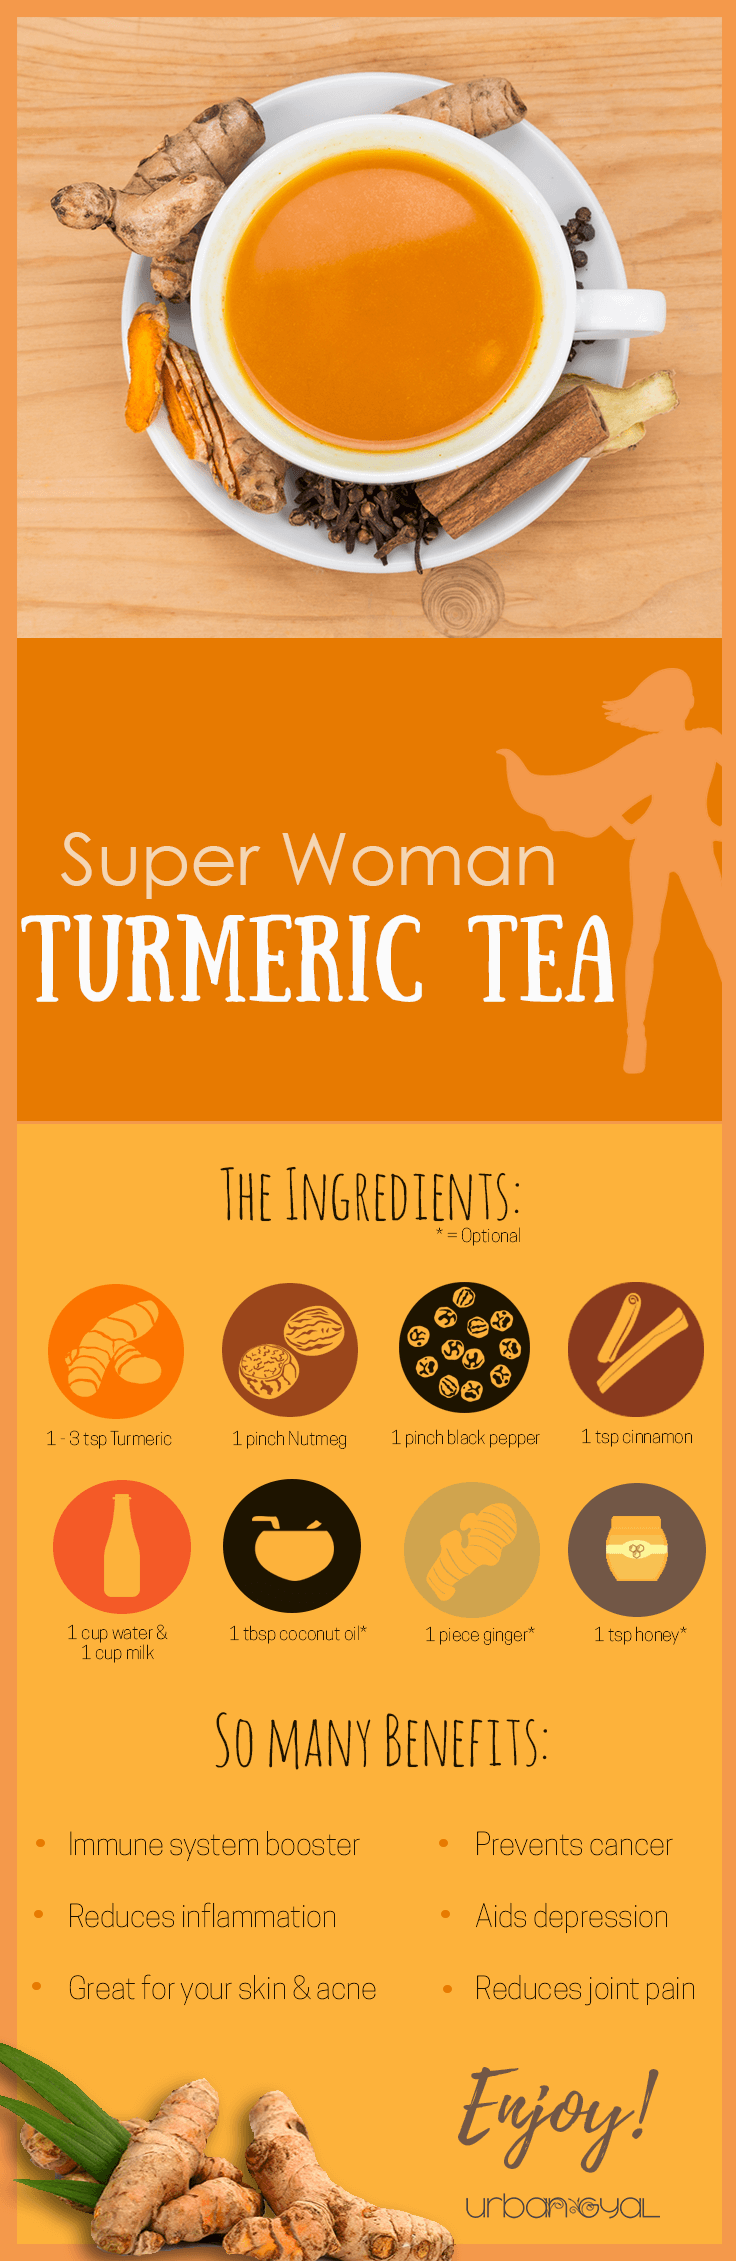 Super Woman Turmeric Tea